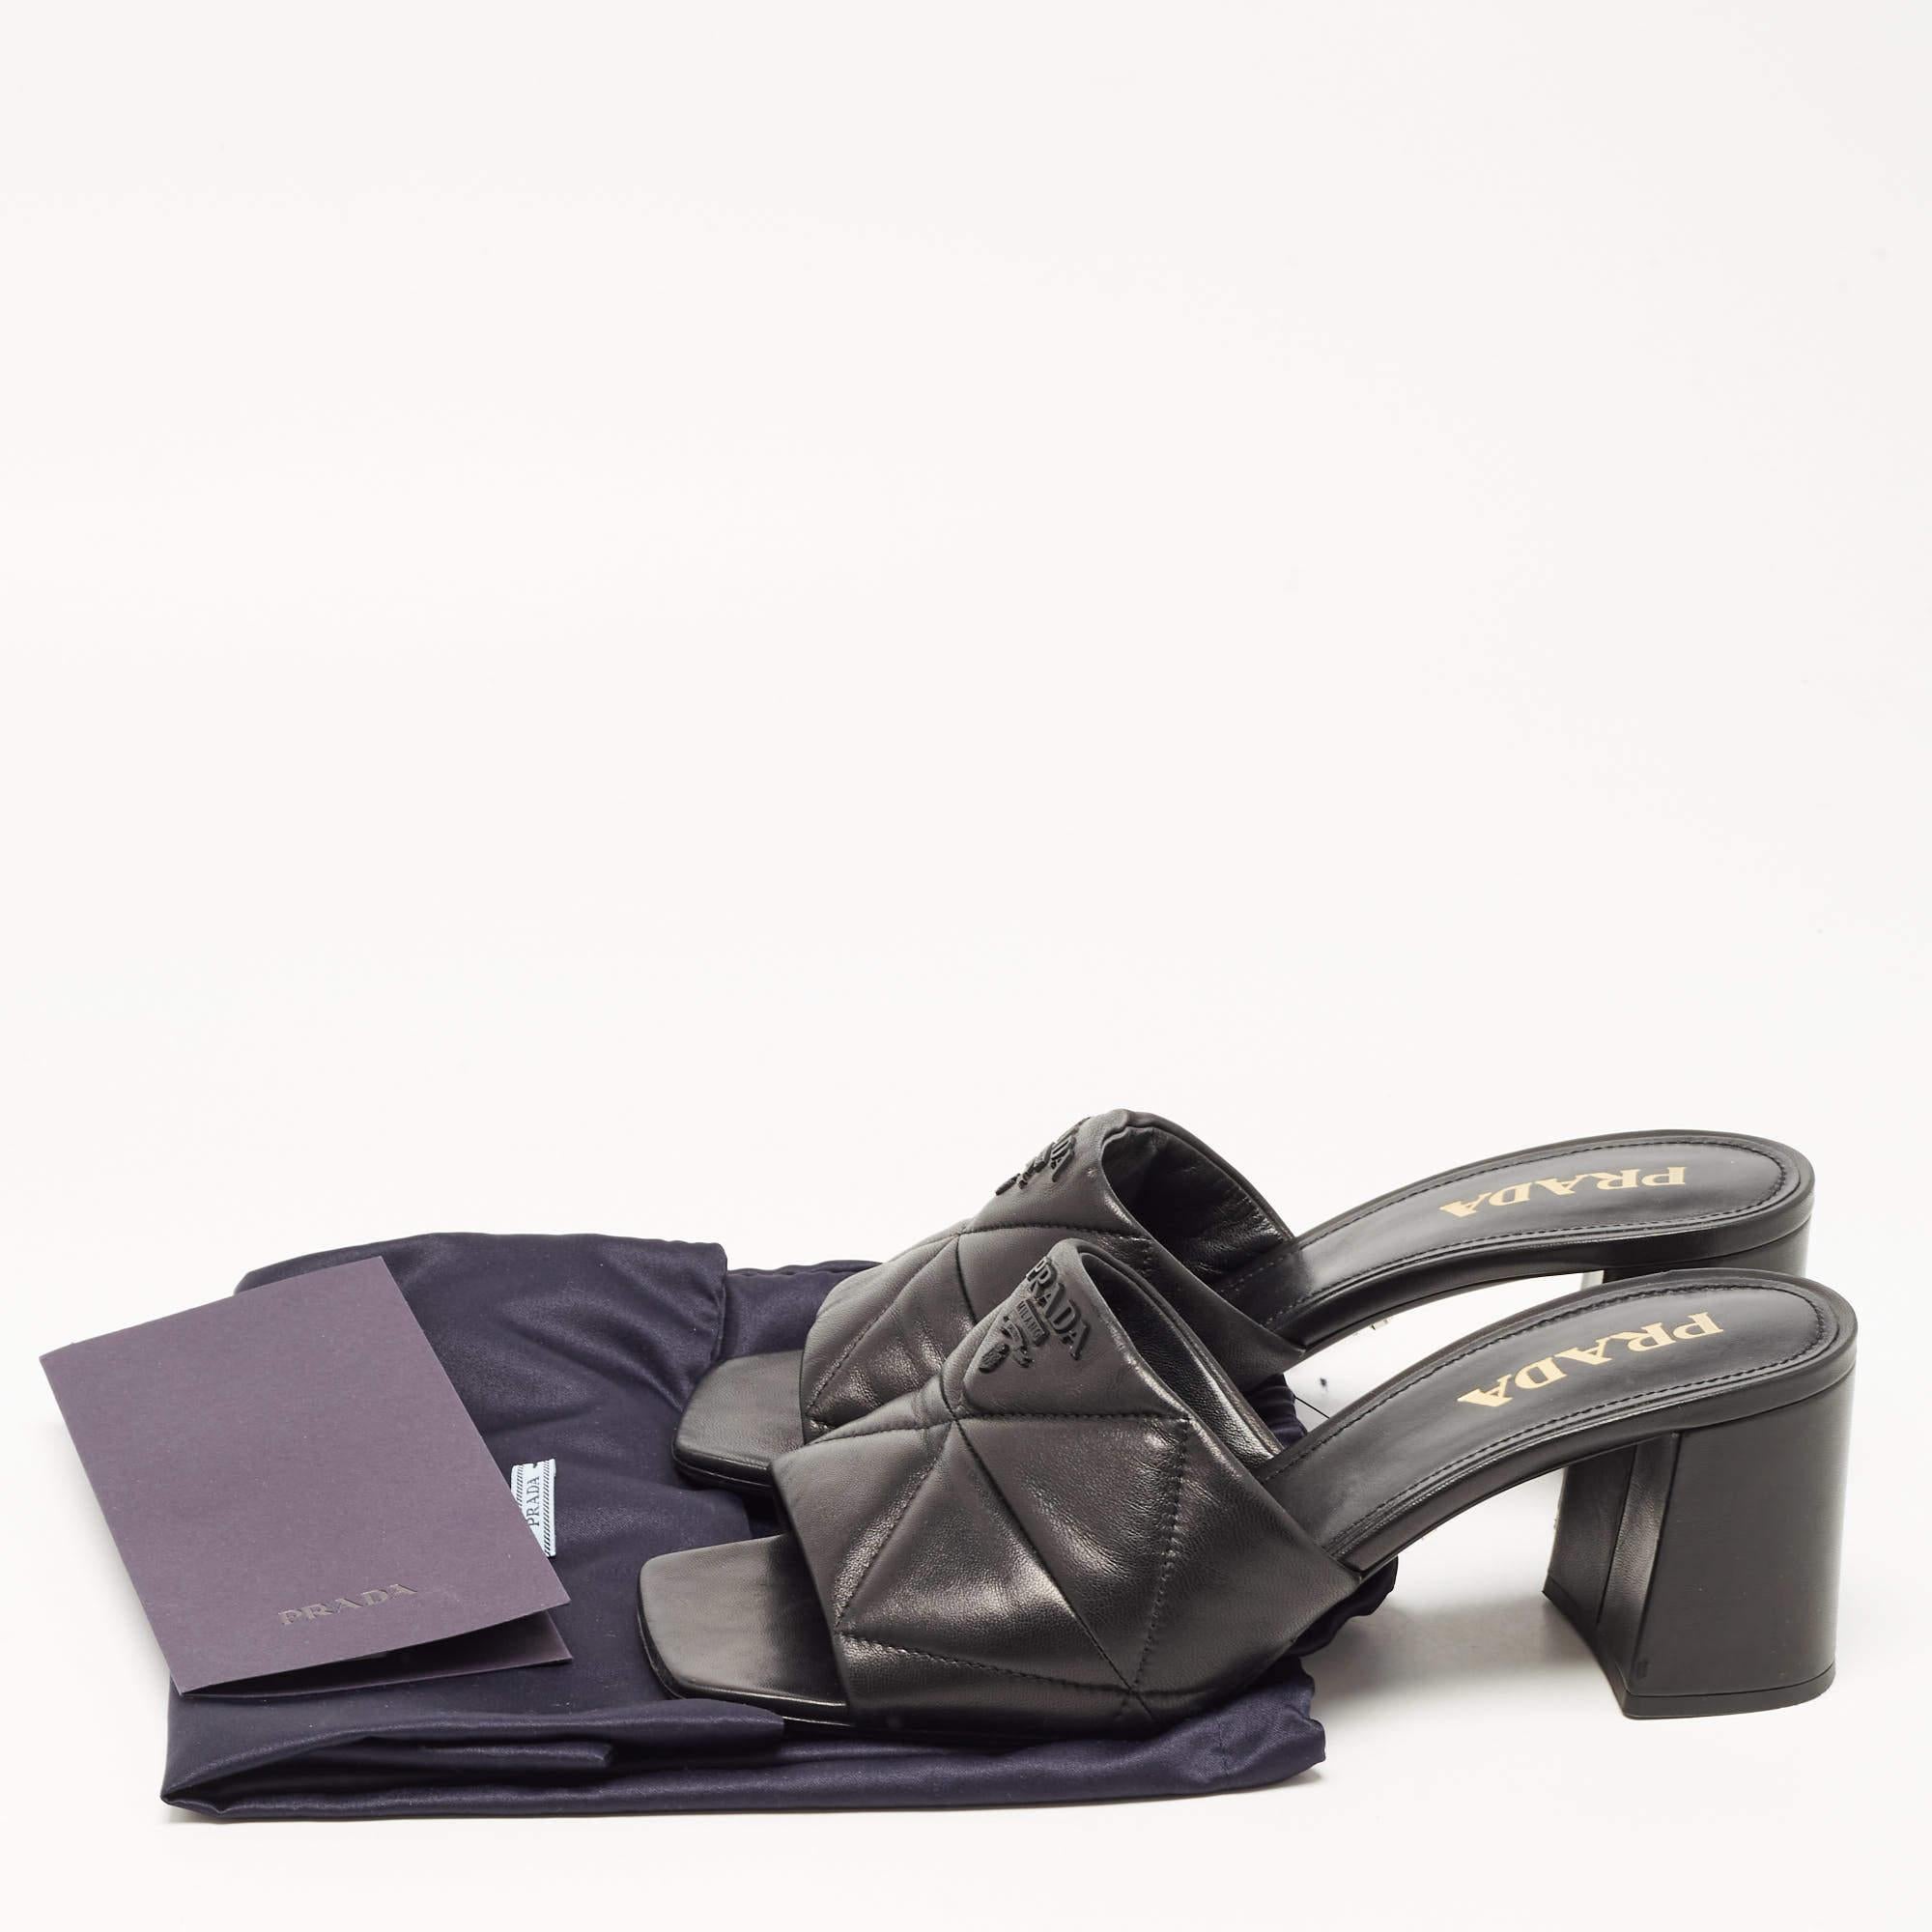 Prada Black Quilted Leather Slide Sandals Size 39 5